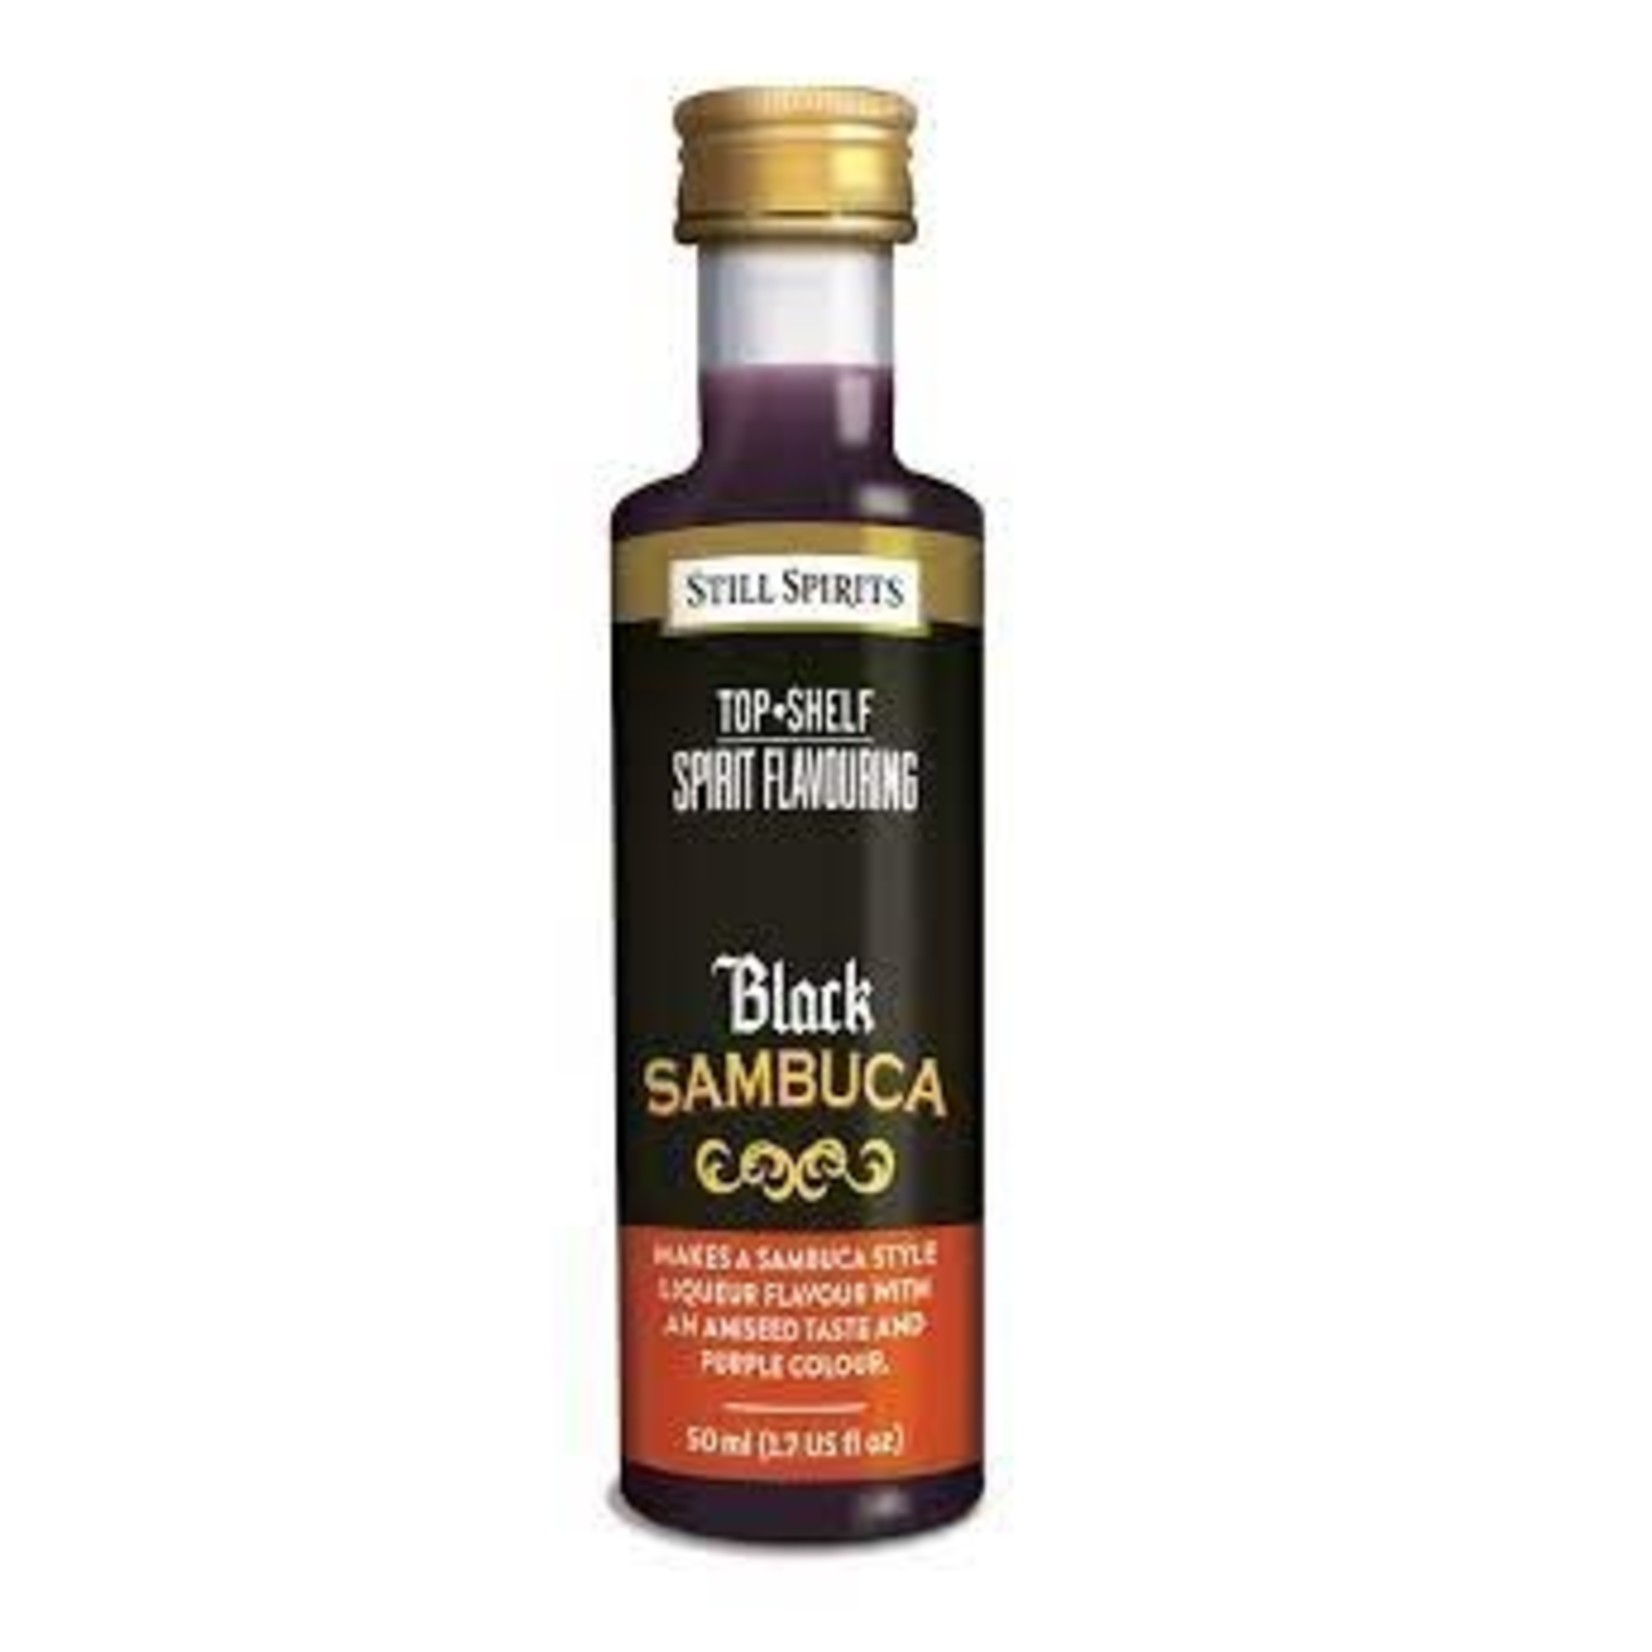 Top Shelf Spirit Flavouring 50 ml - Black Sambuca